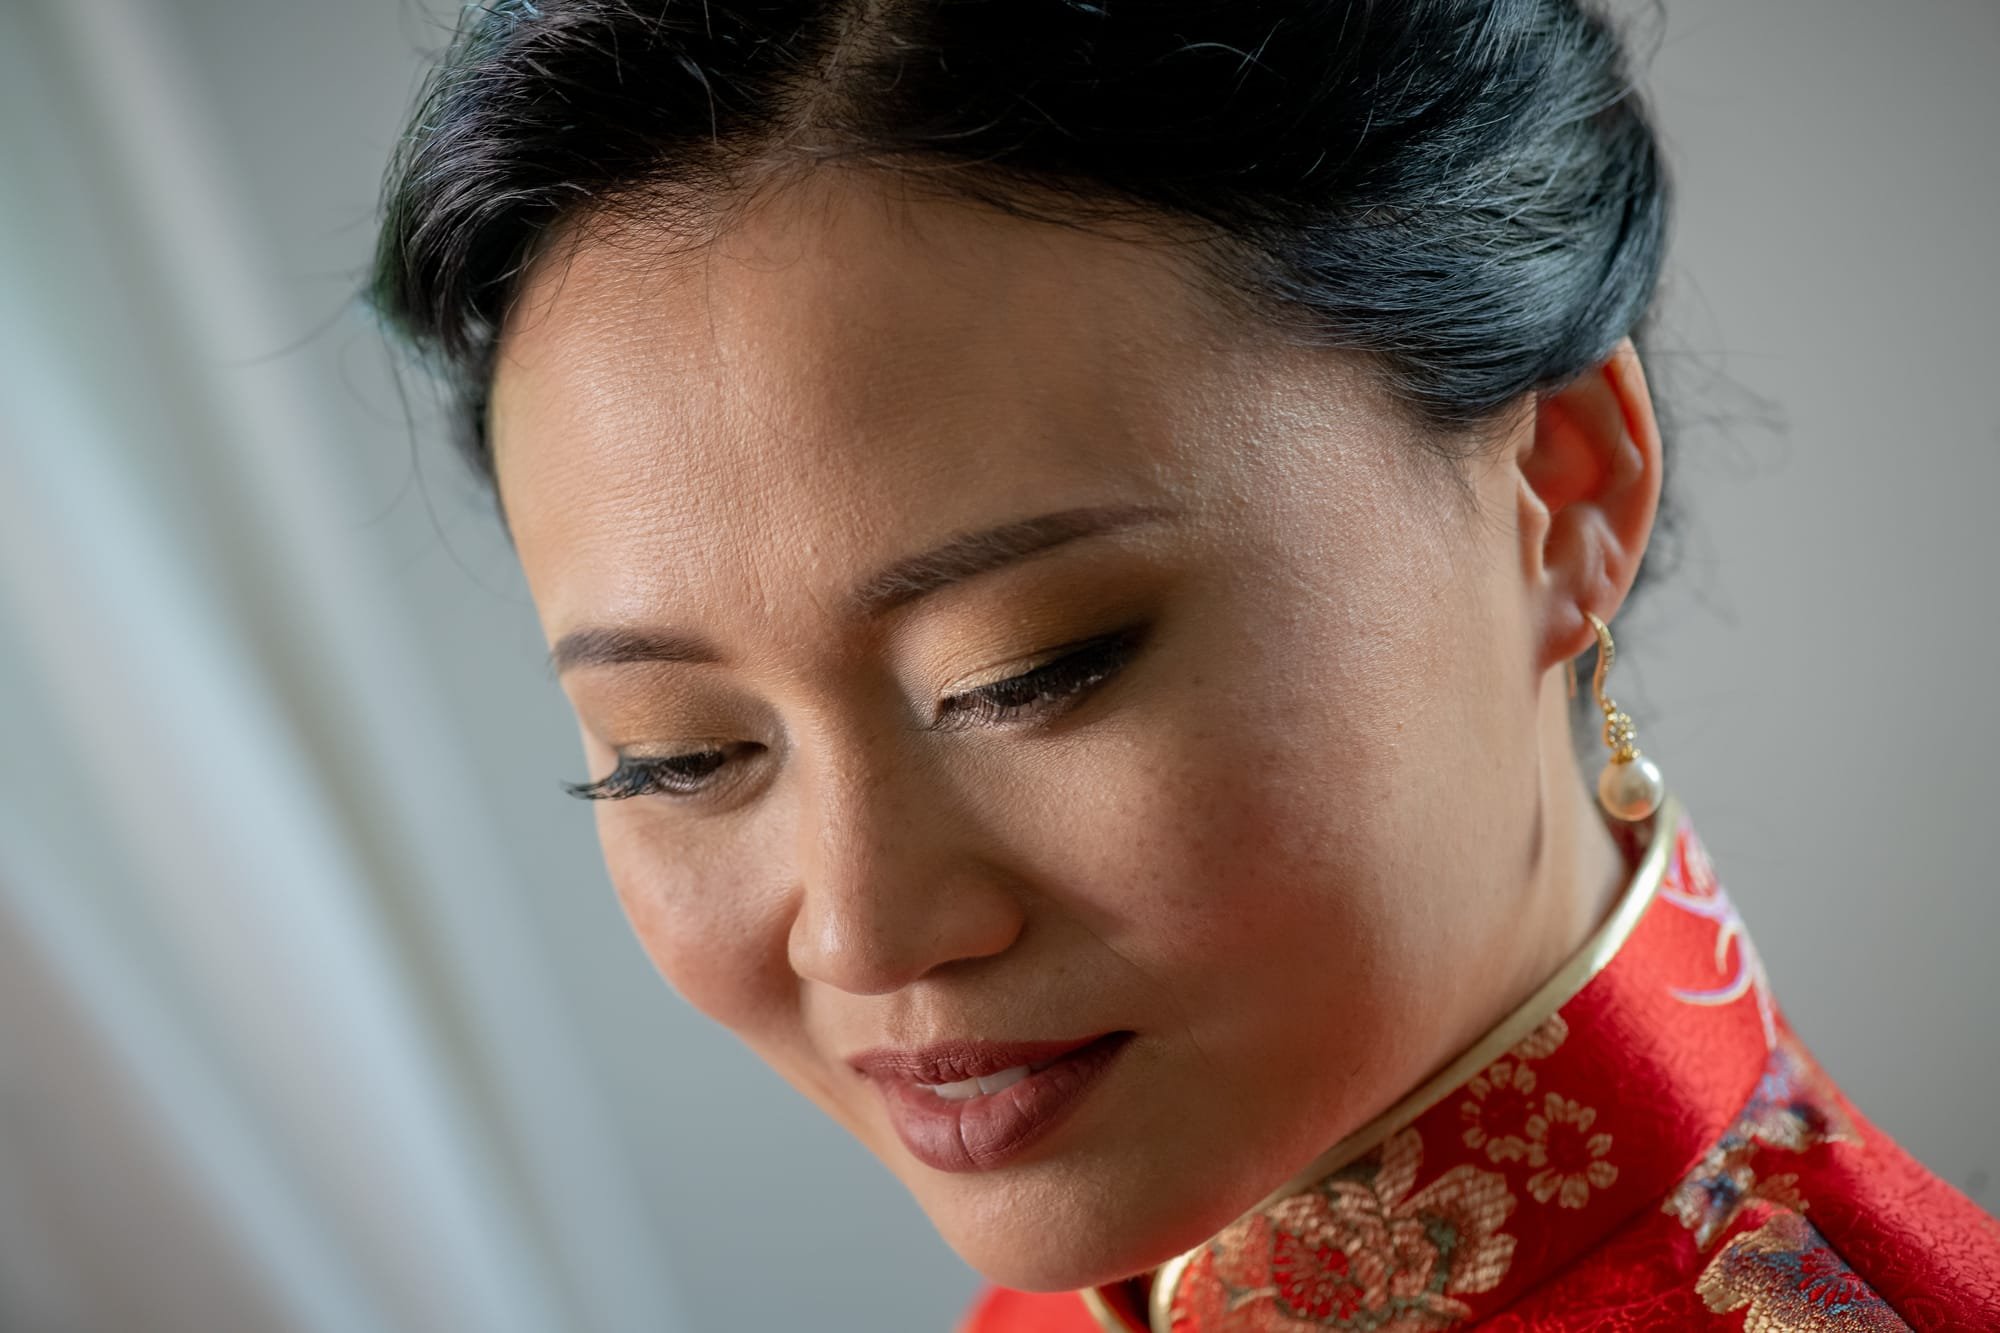 Maquillage mariage yeux asiatique